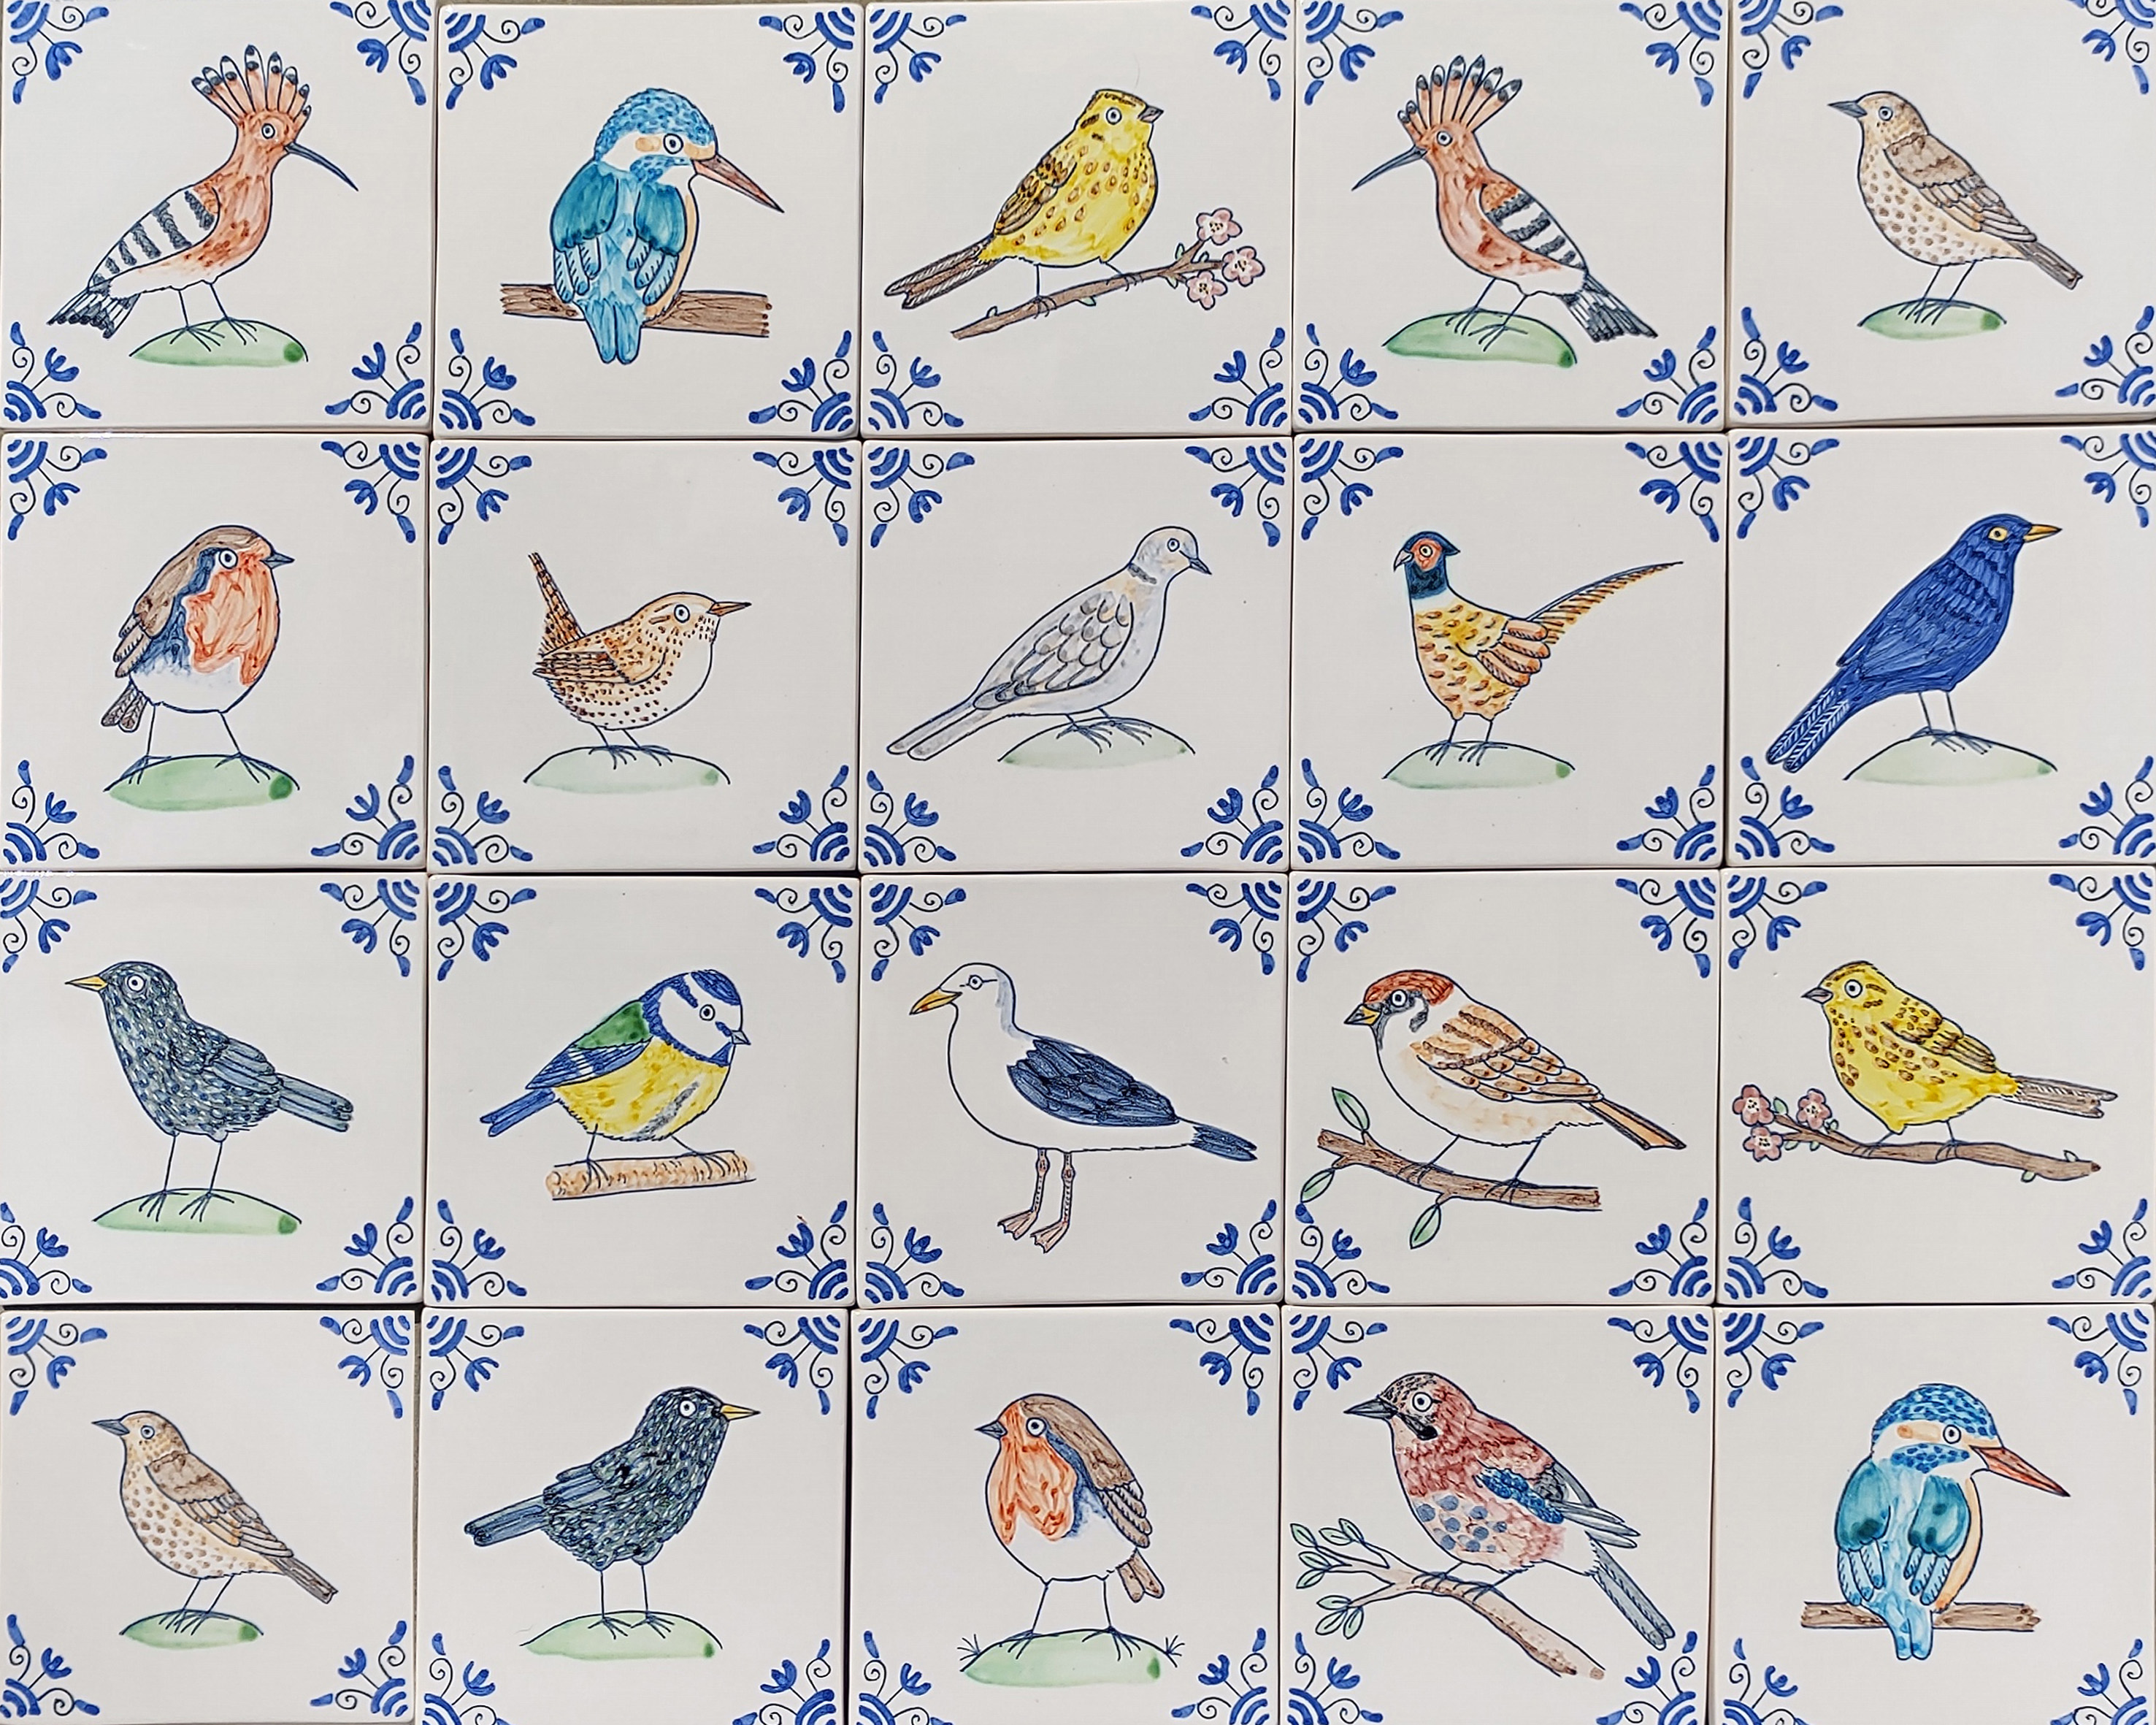 Bird tiles